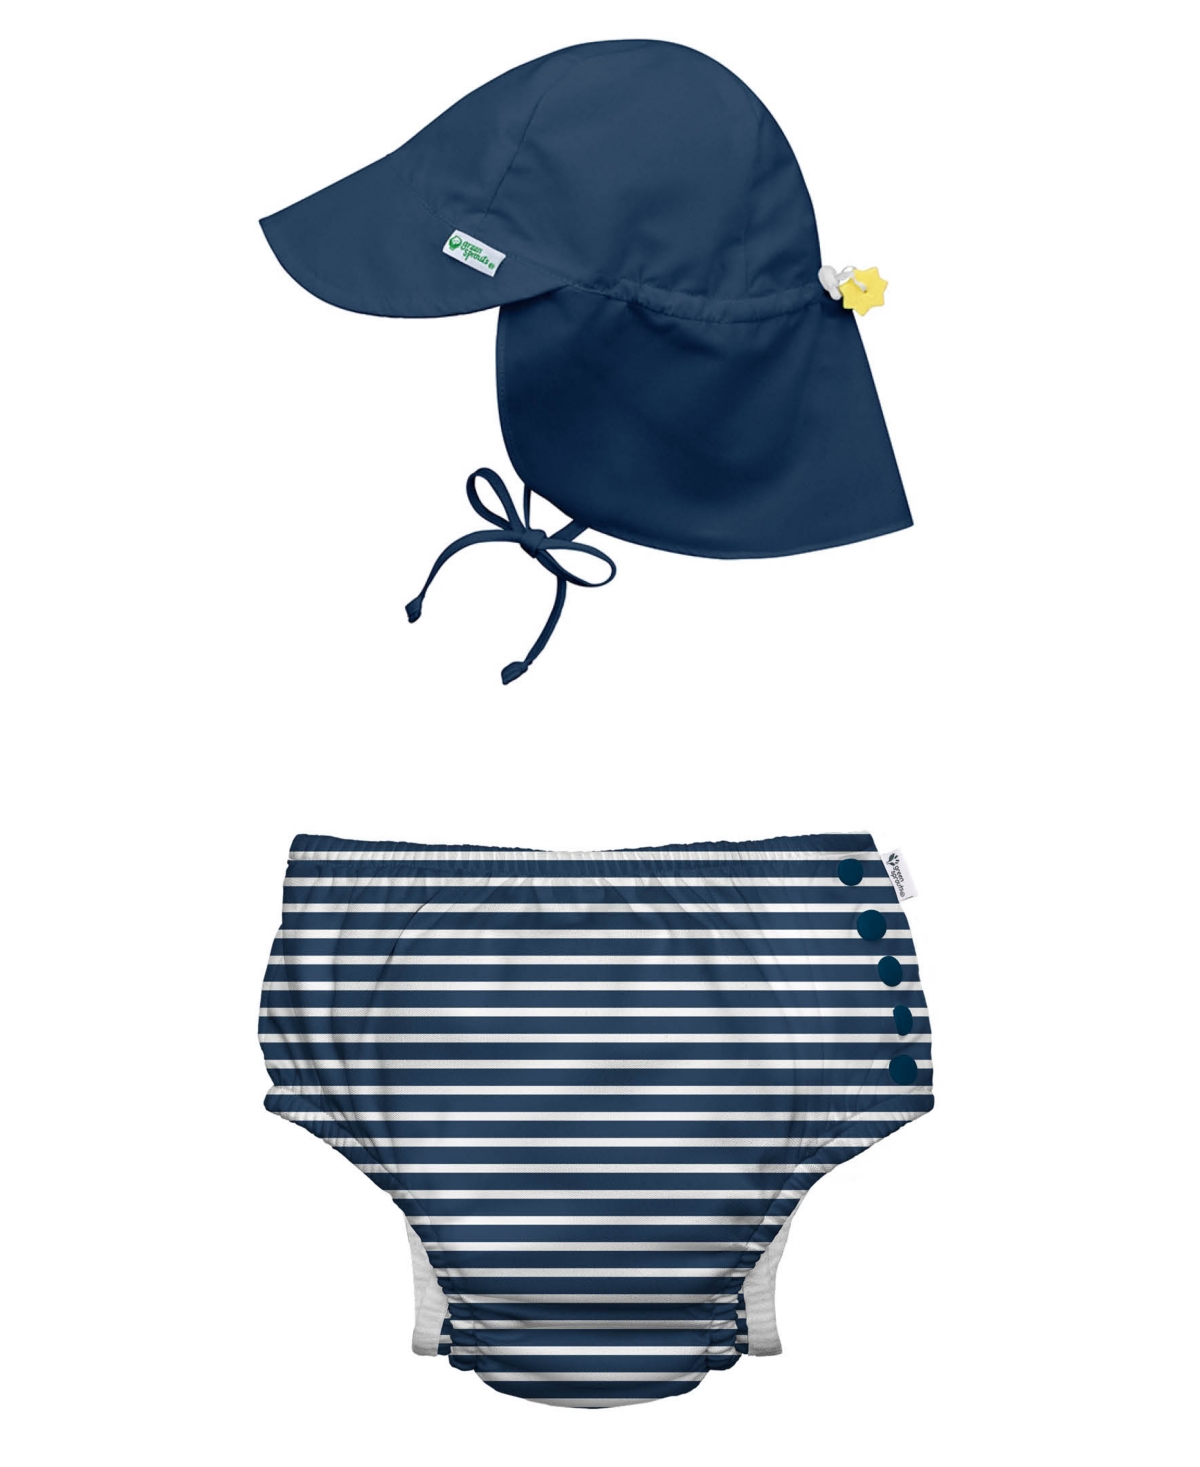 Green Sprouts Babies' Sun Hat, Long Sleeve Rashguard & Reusable Swim Diaper Set In Navy Stripe